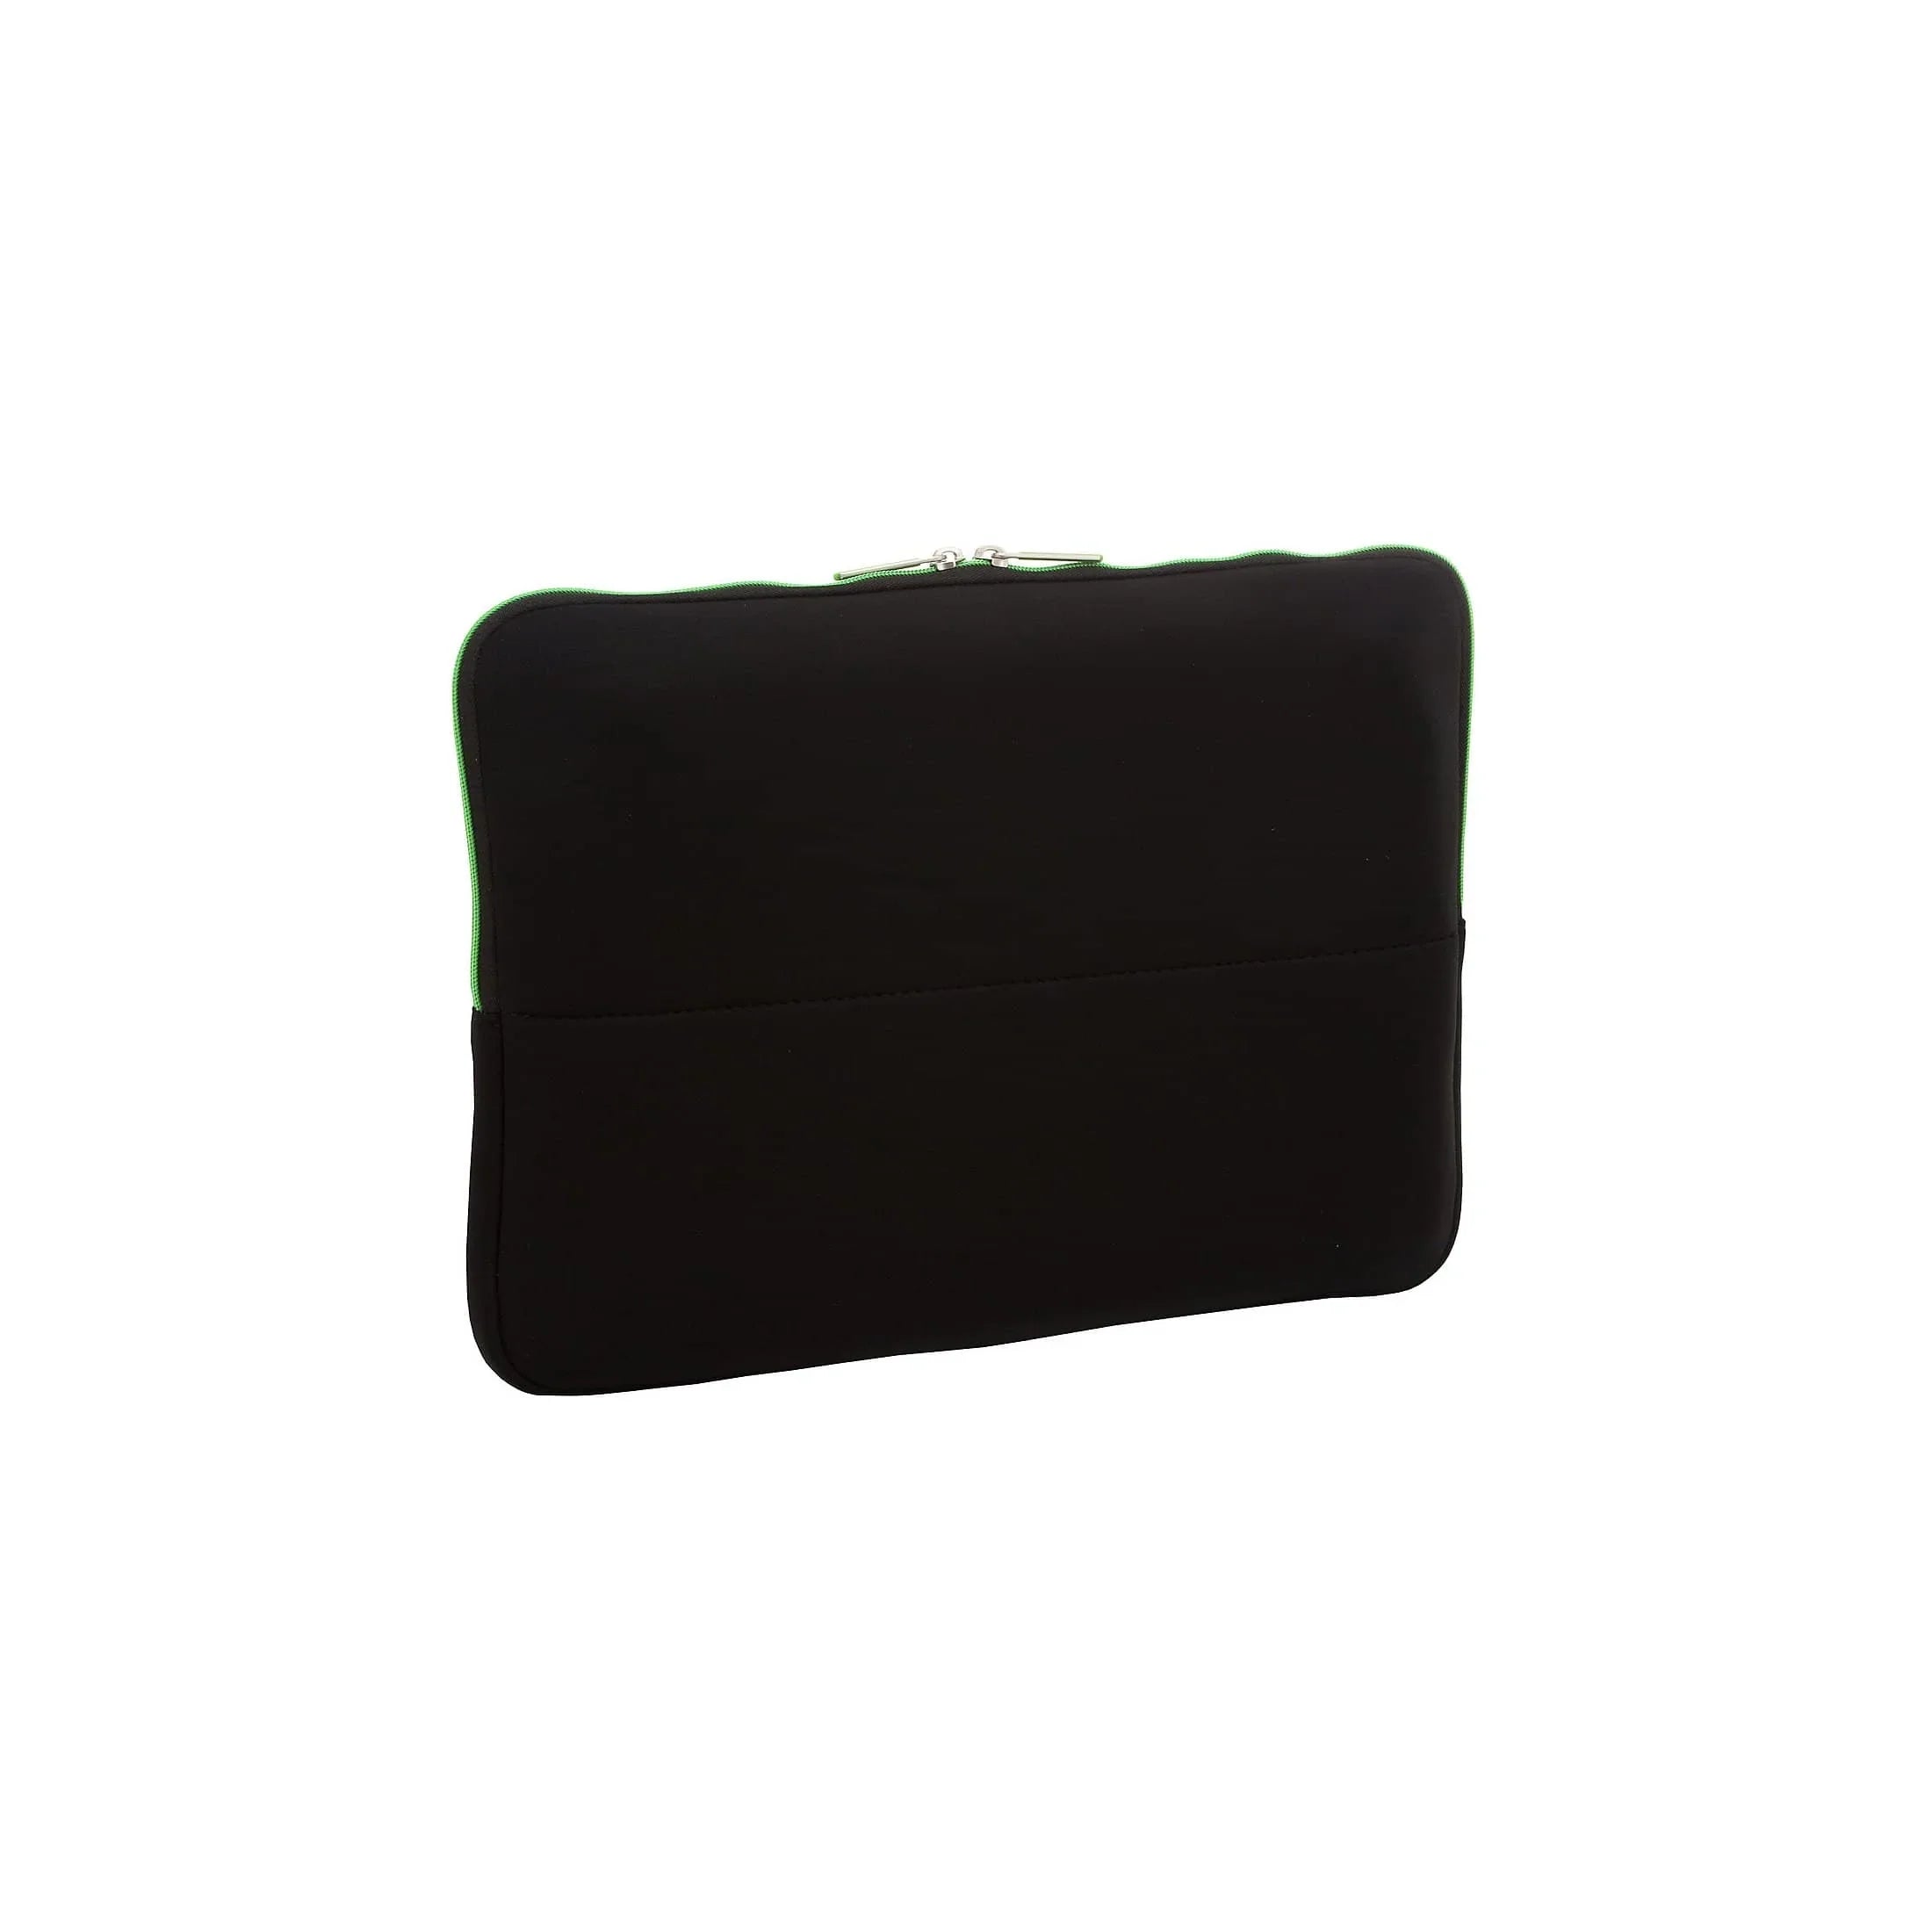 Samsonite Airglow Laptophülle 40 cm - schwarz/rot